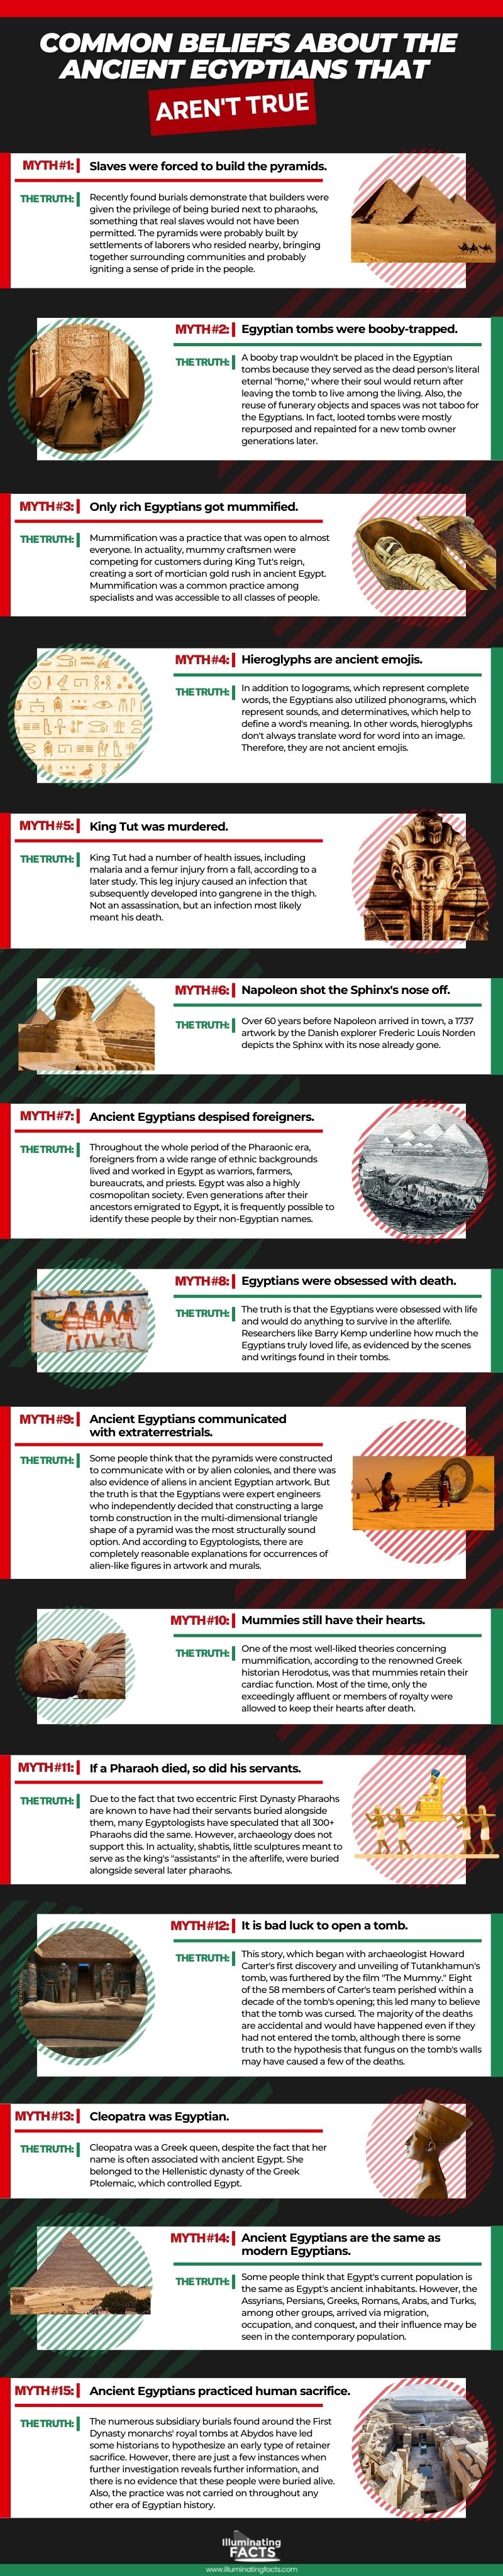 Common Beliefs About the Ancient Egyptians that Aren't True